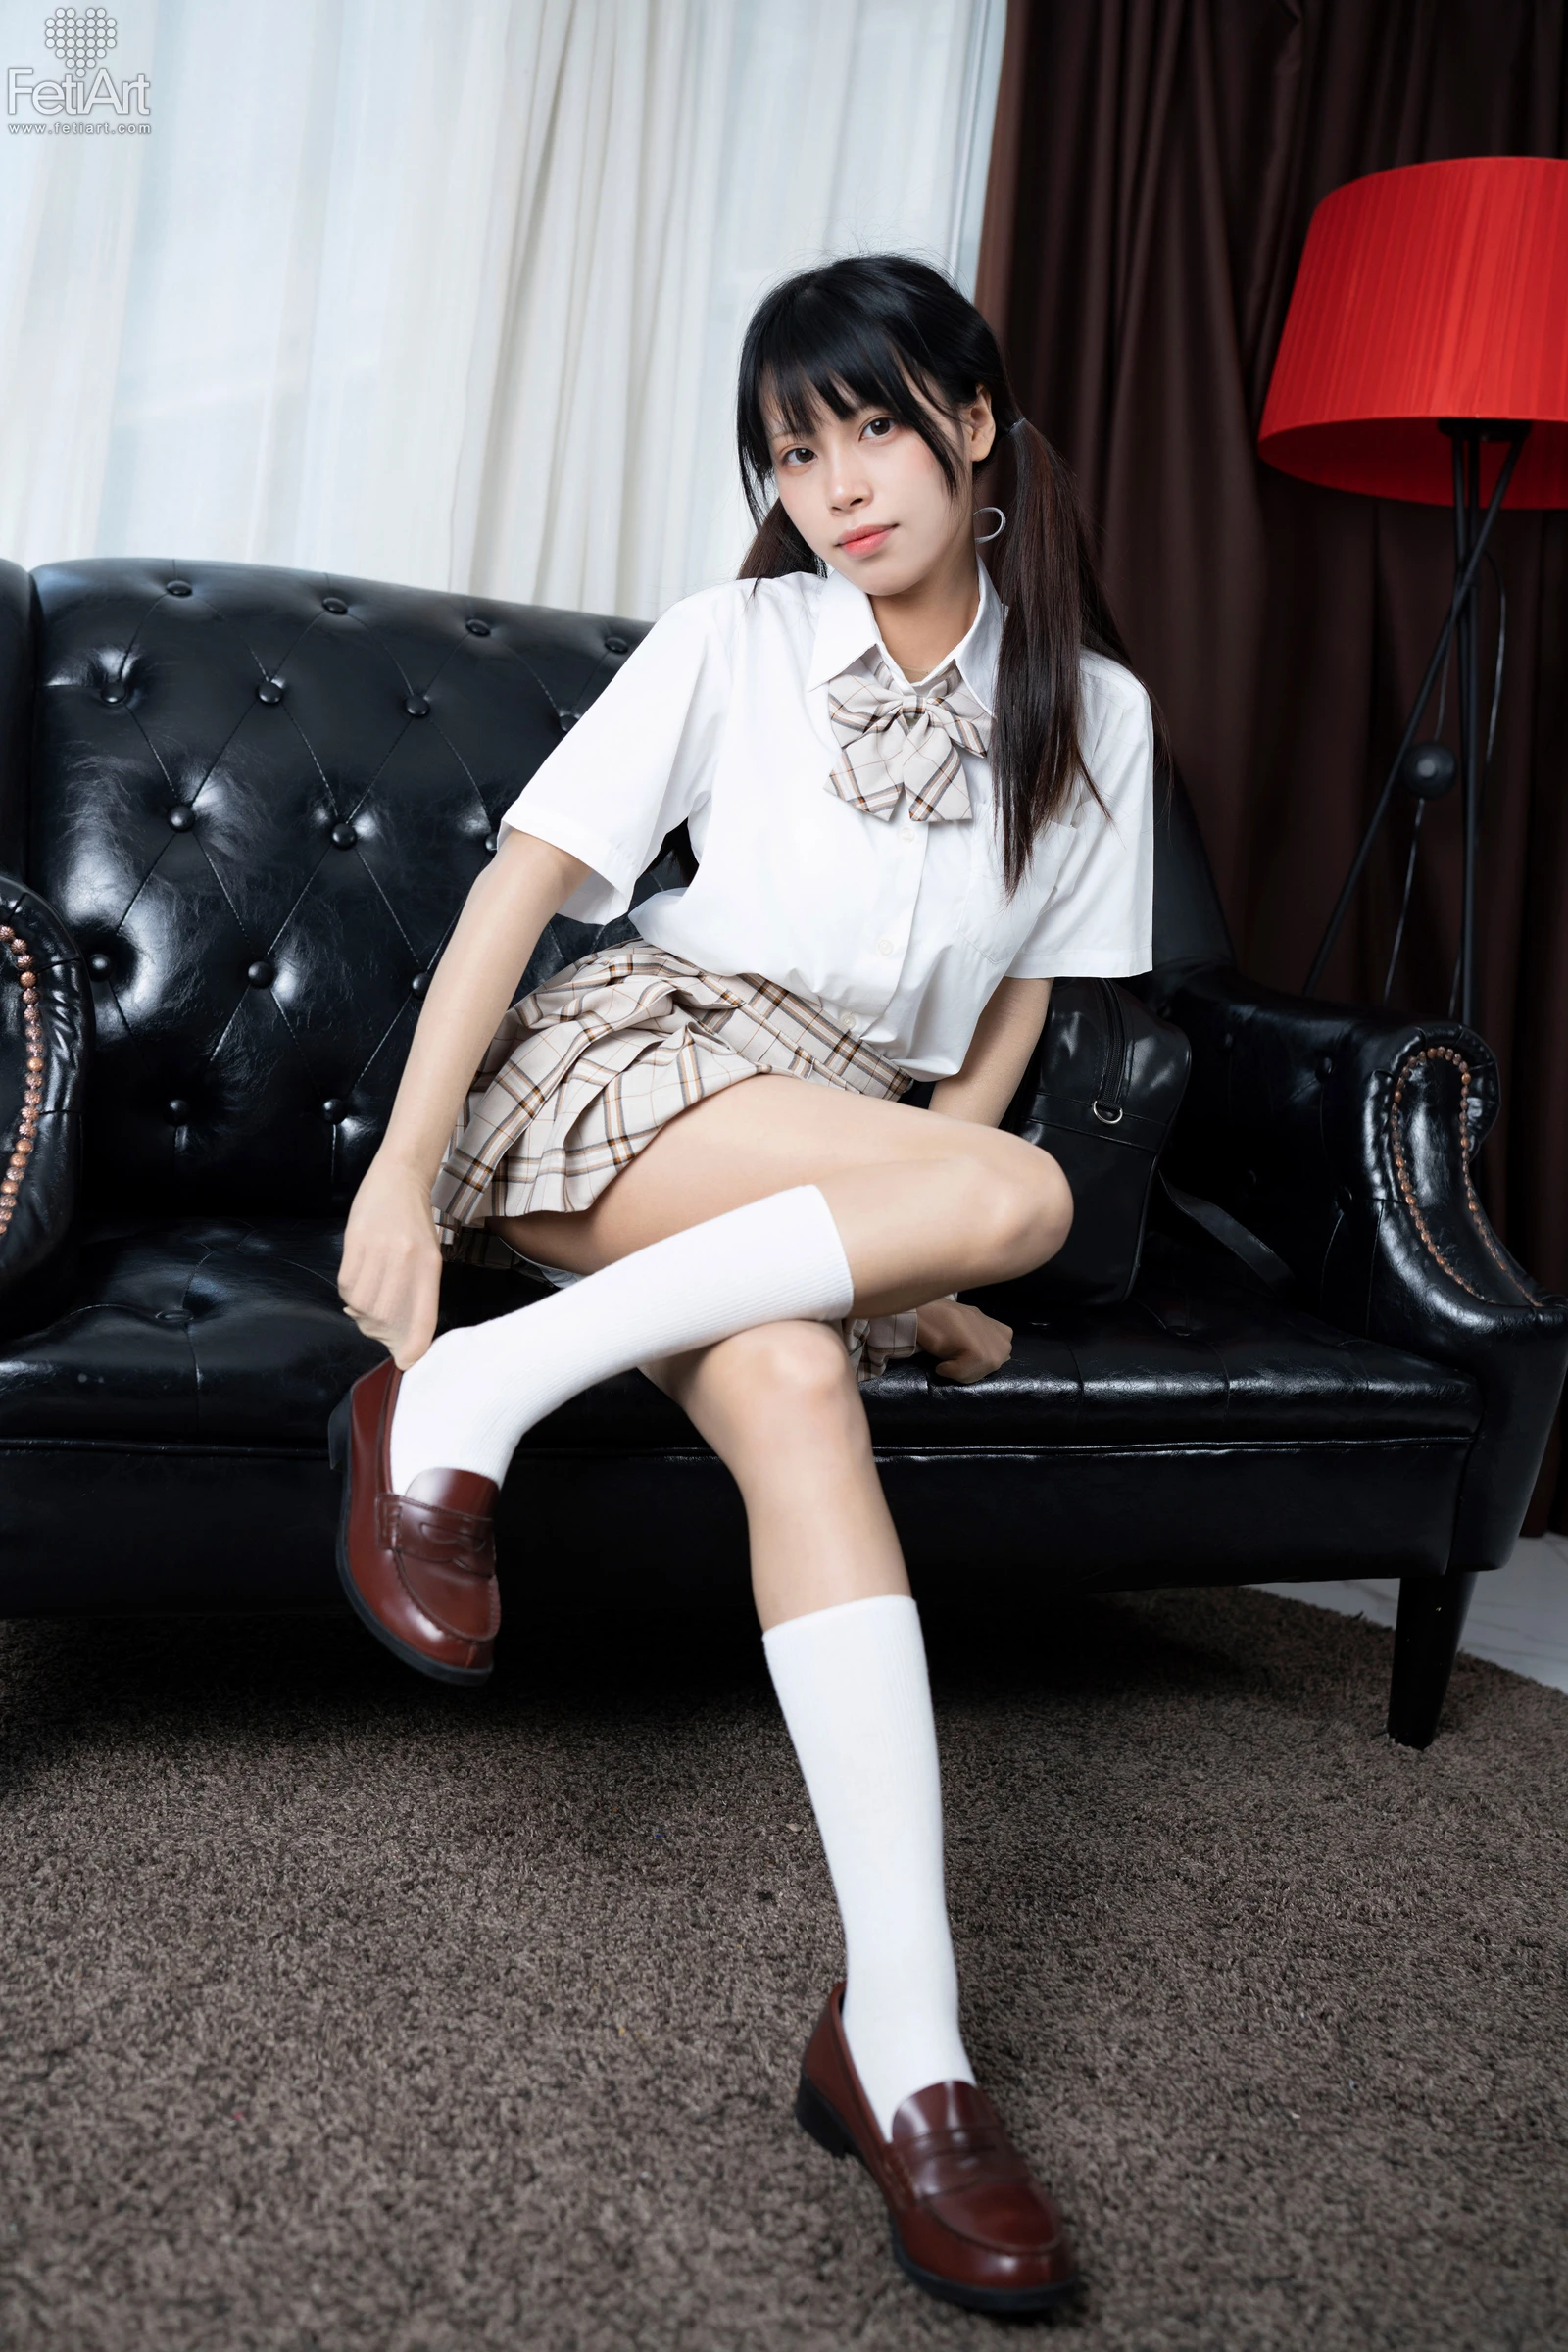 FetiArt尚物集 No.075 Naughty Highschool Girl MODEL-Riell